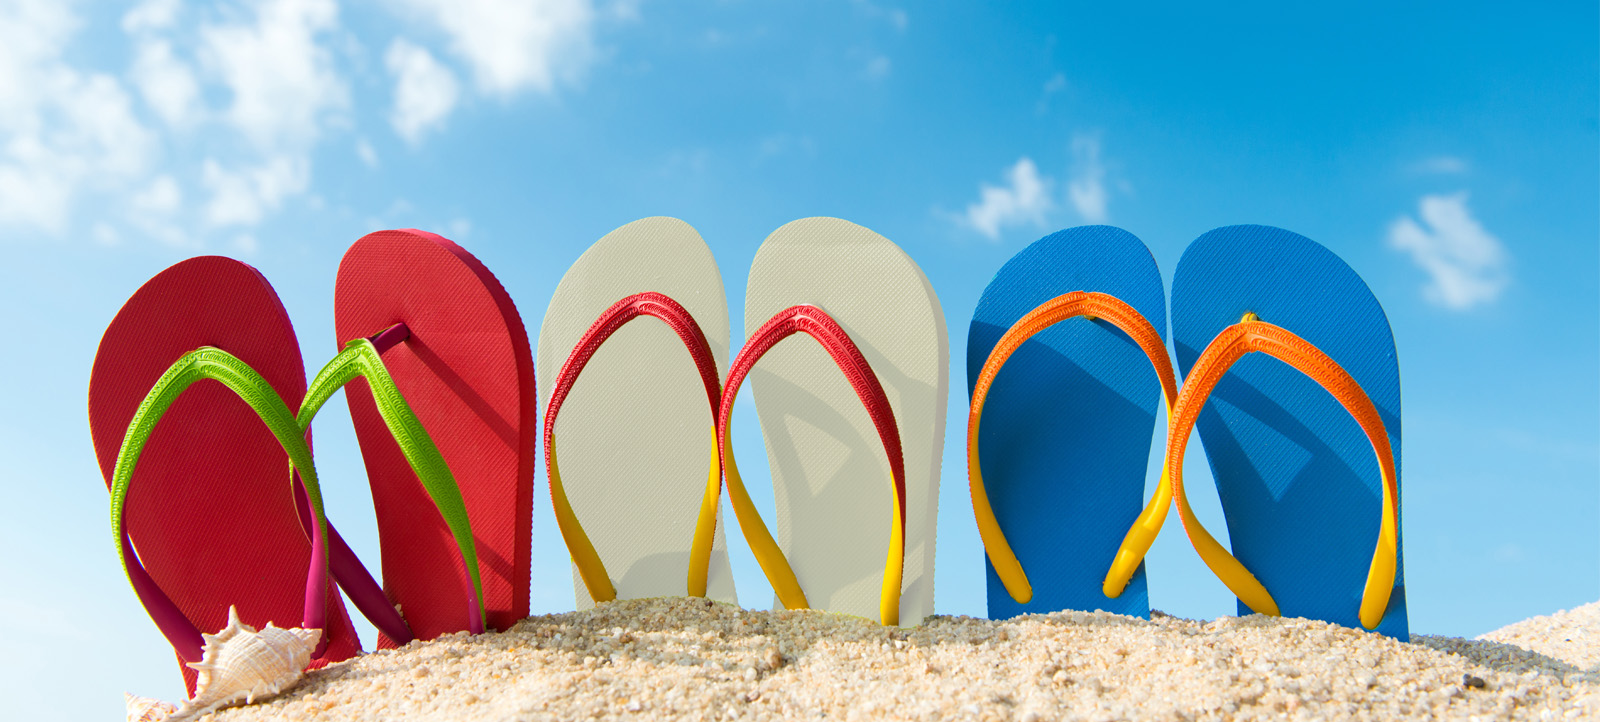 Sandals on the beach.